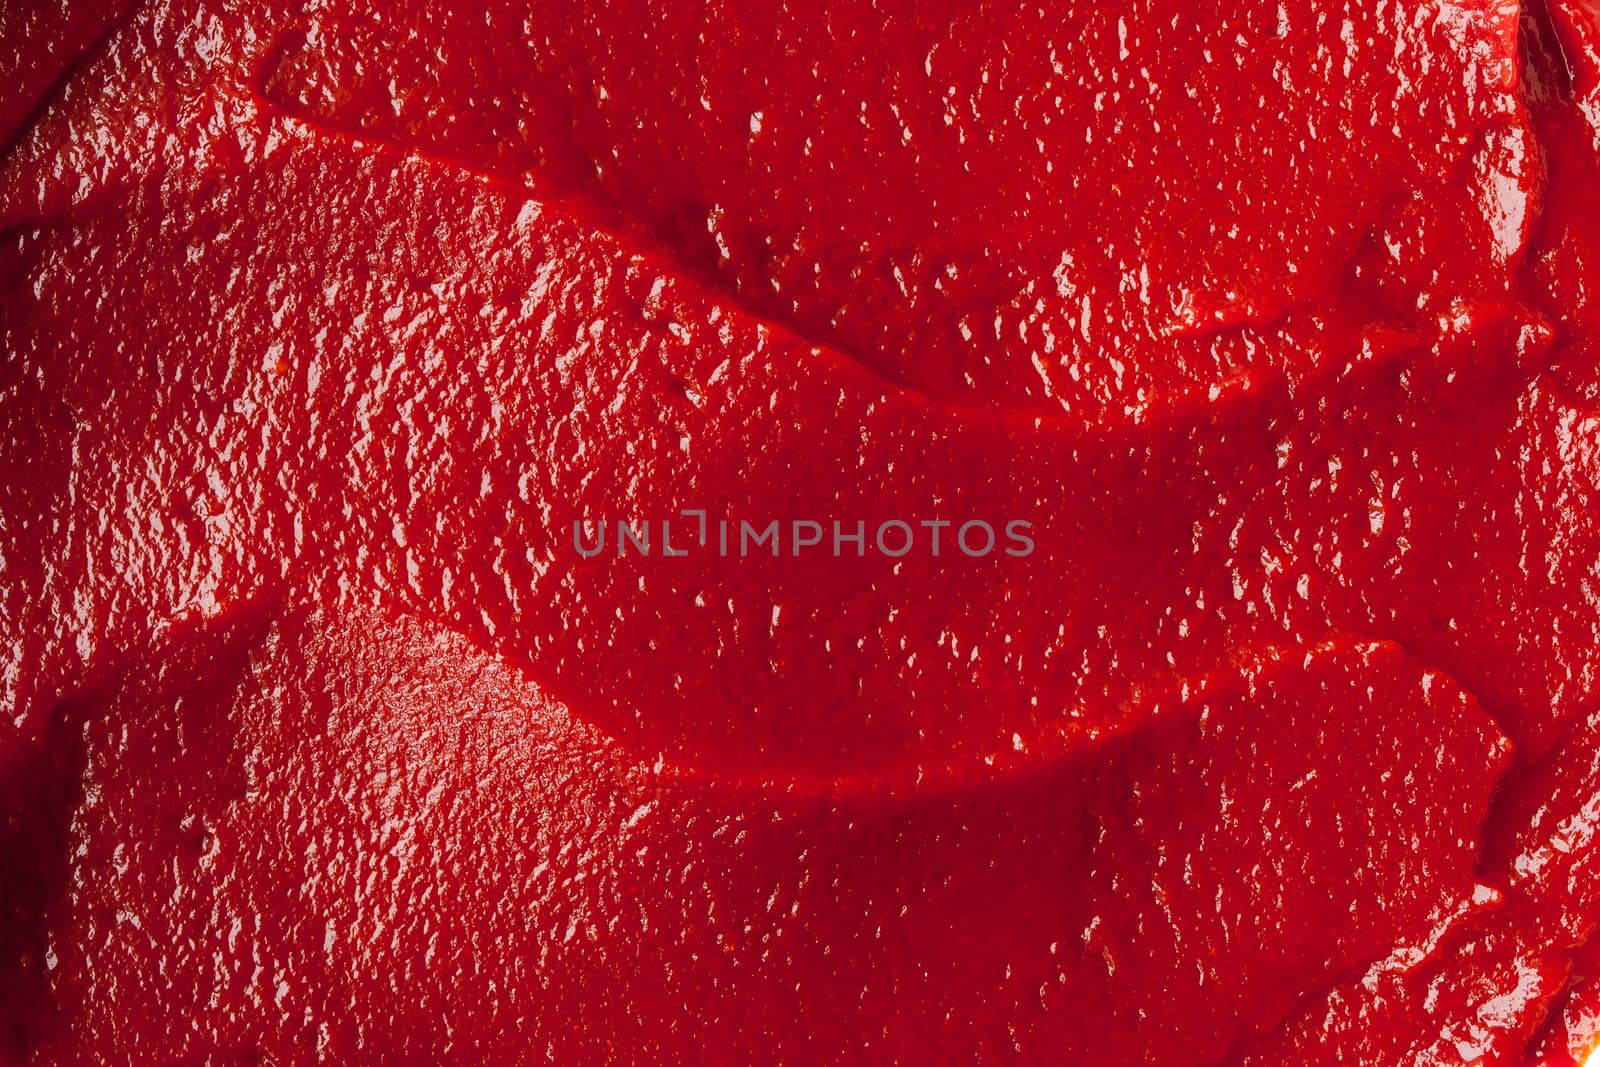 Tomato paste texture close-up horizontal